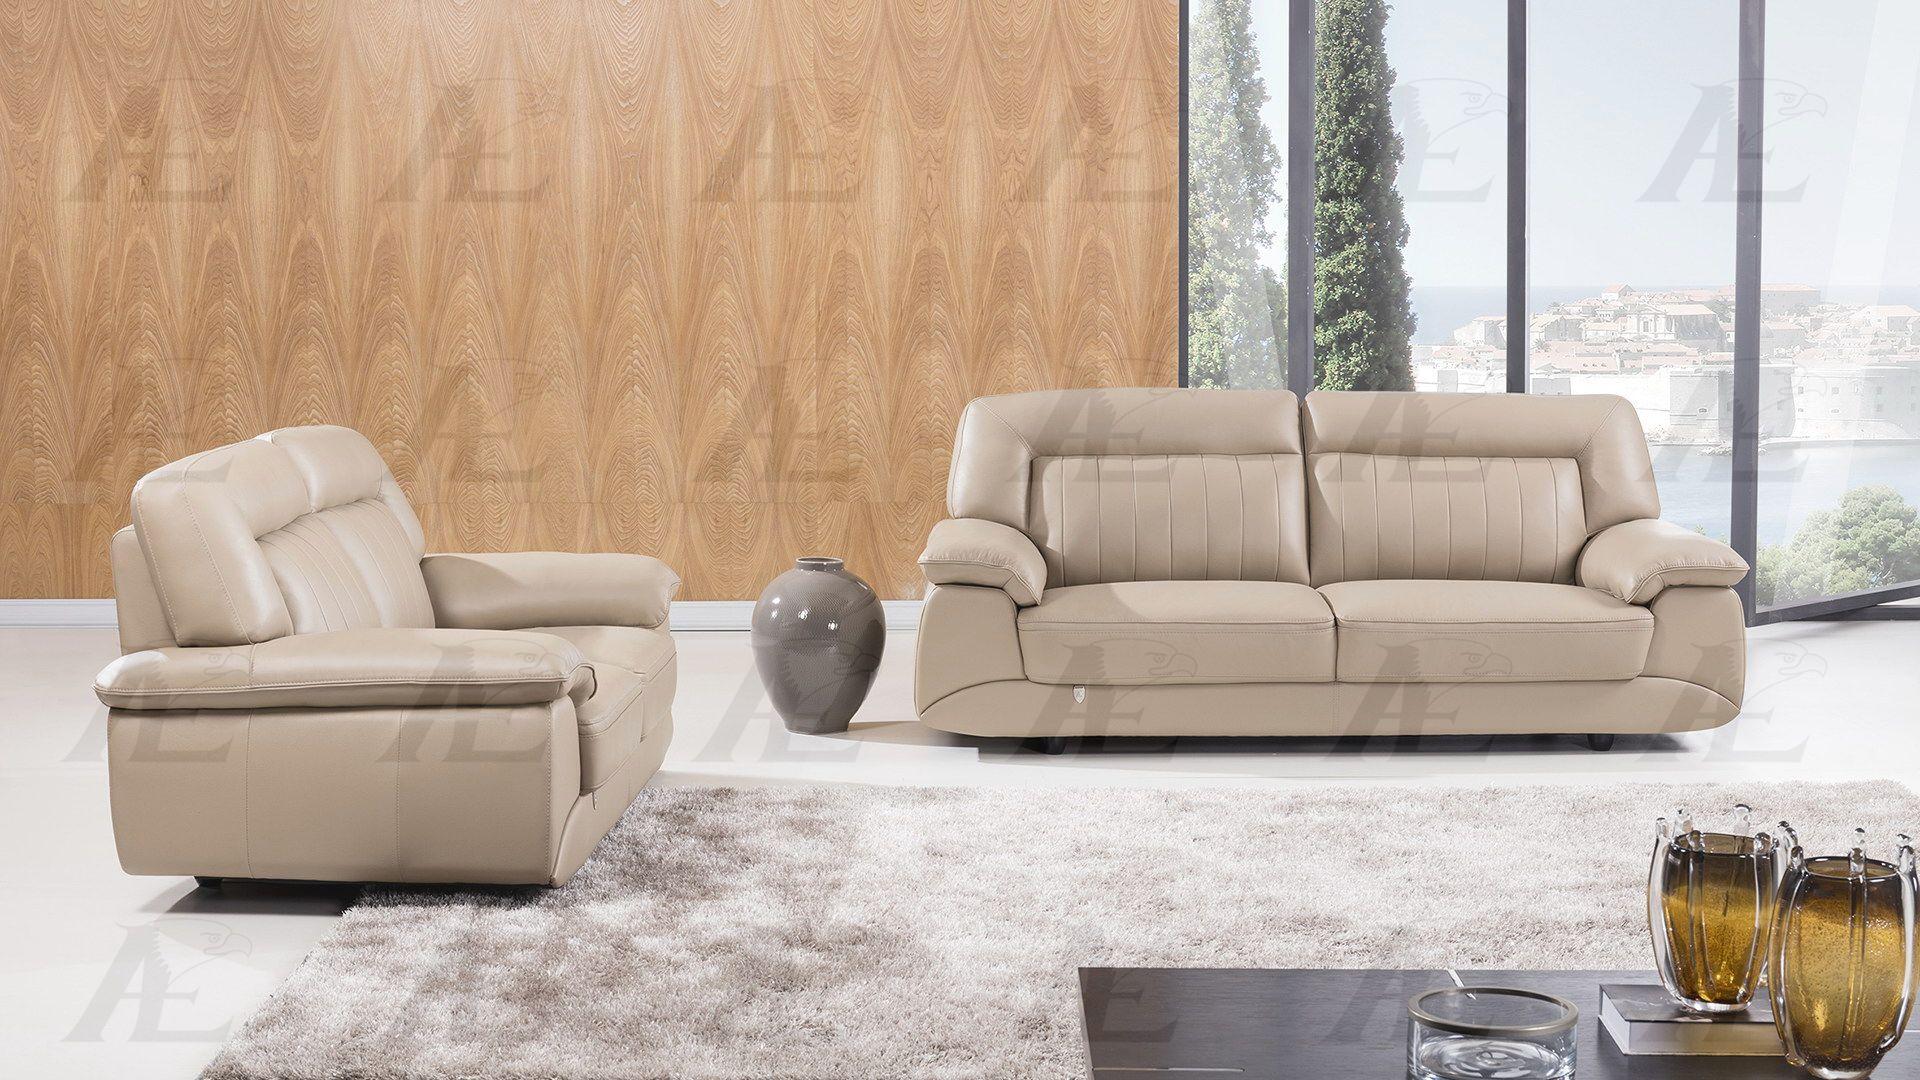 

    
American Eagle Furniture EK072-TAN  Tan Top Grain Italian Leather Sofa & Loveseat Set 2Pc
